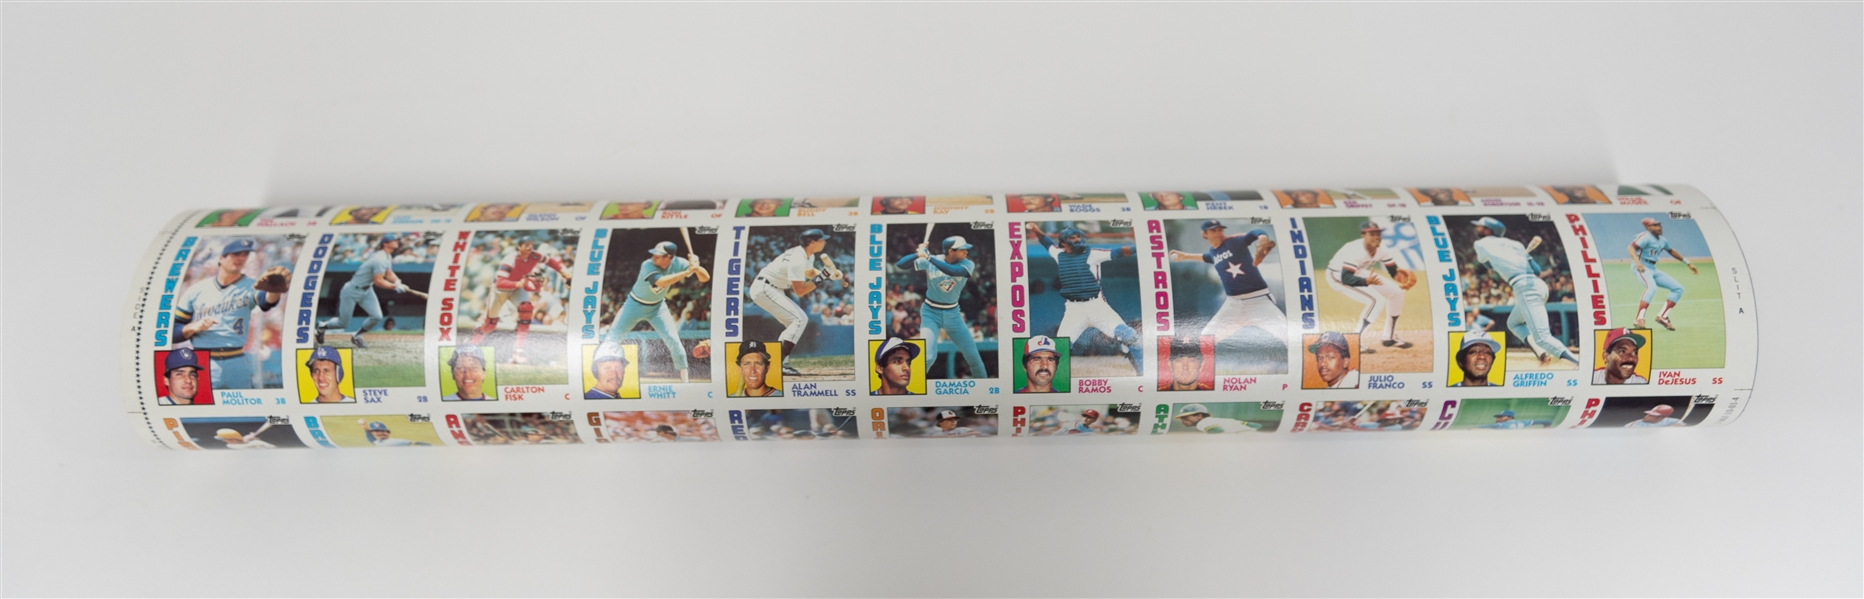 1984 Topps Baseball Uncut Sheet w. Don Mattingly Rookie, Darryl Strawberry Rookie, Mike Schmidt, Nolan Ryan, More